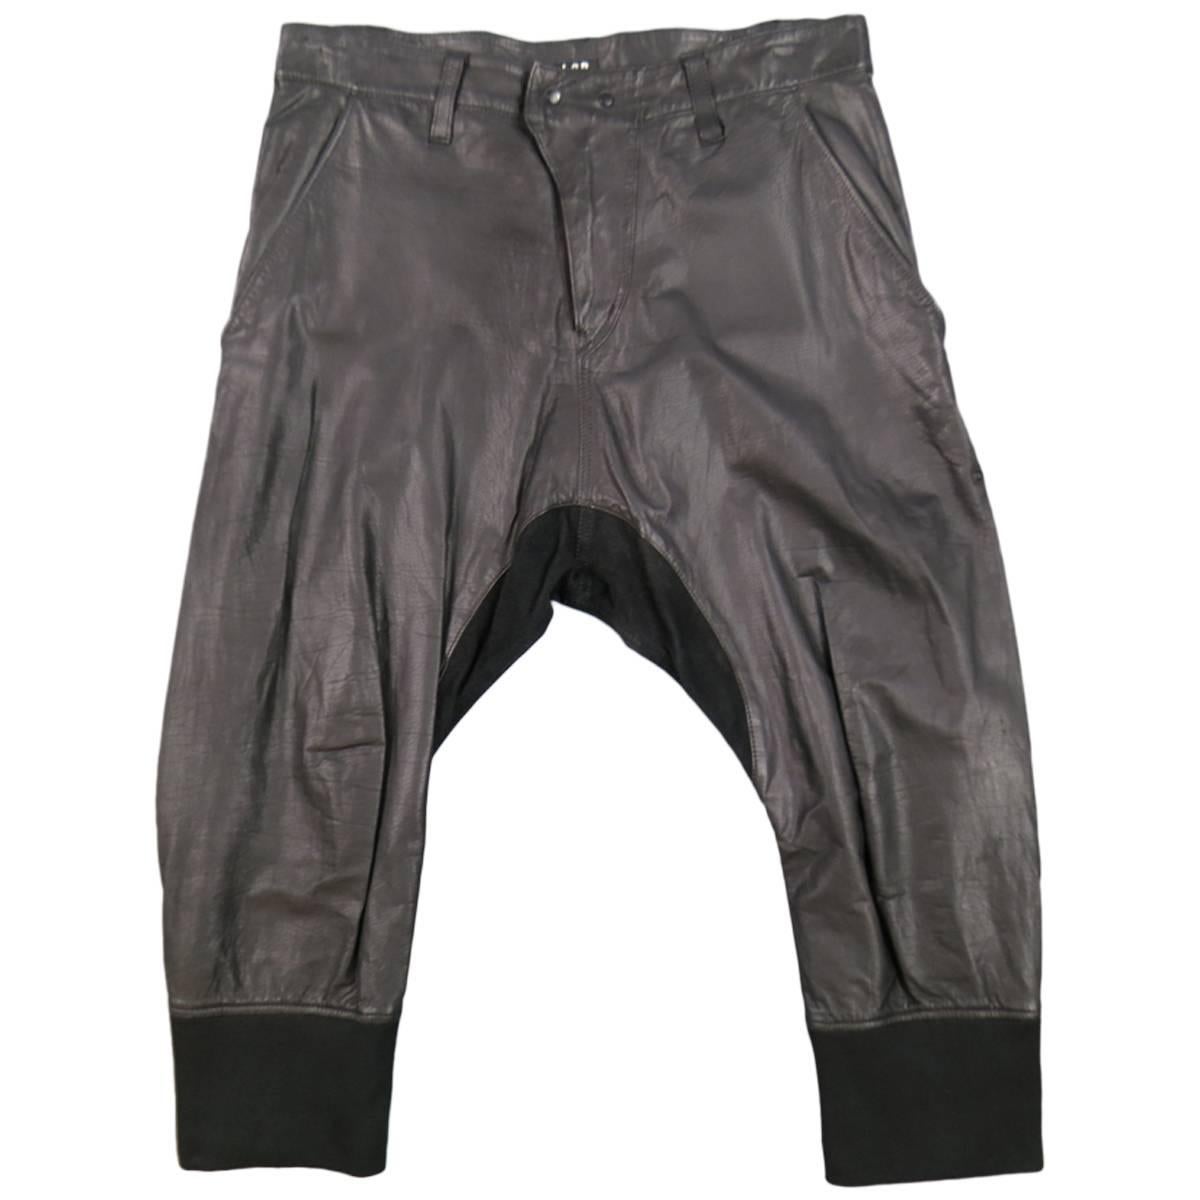 L.G.B Size 33 Men's Black Leather Cropped Drop Crotch Pants